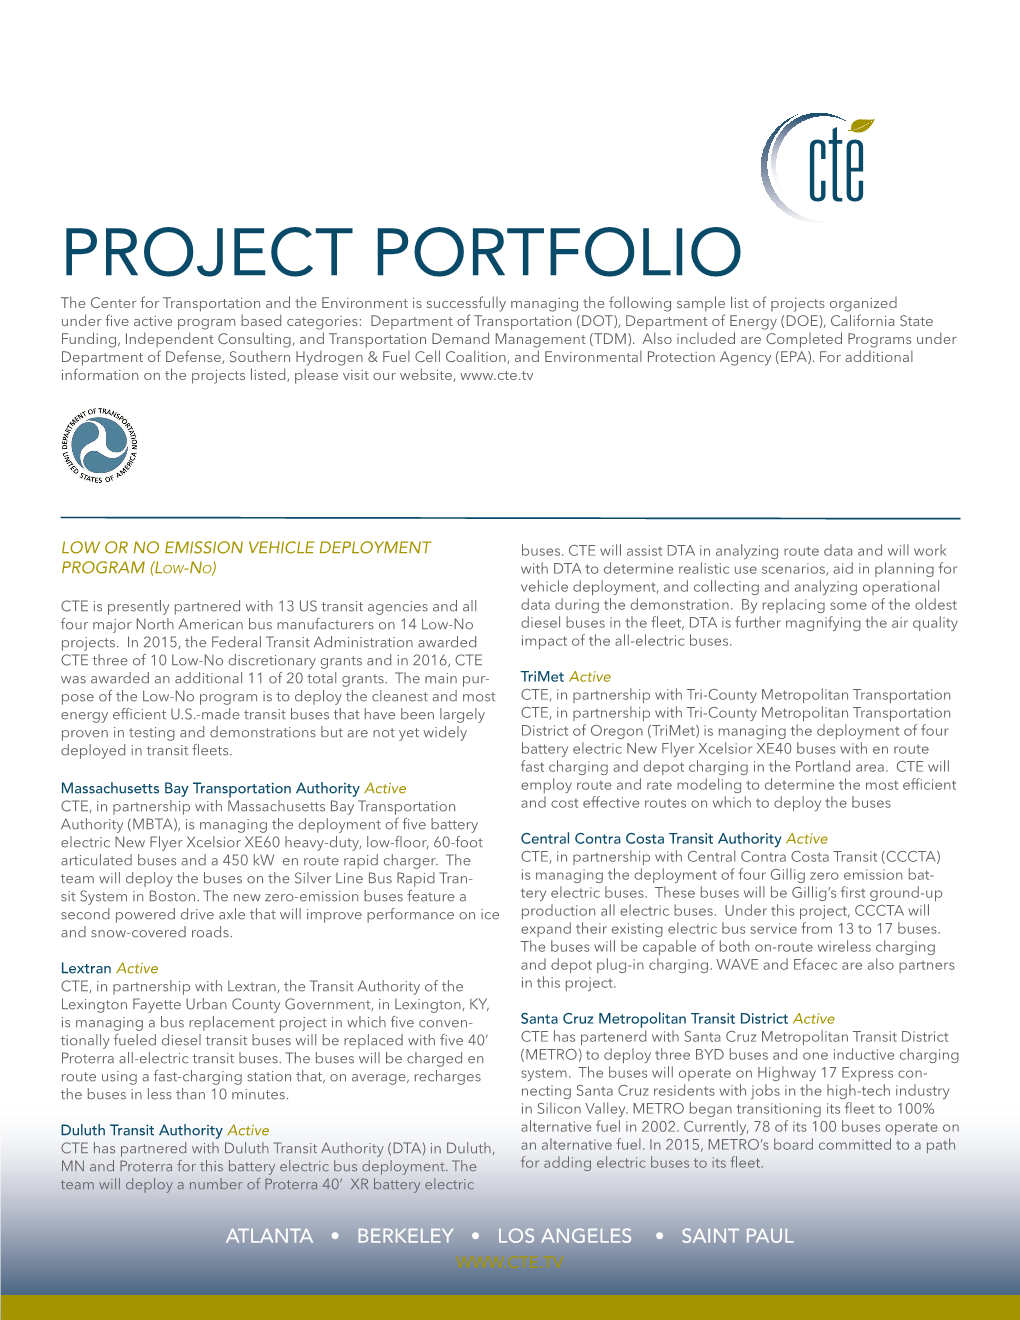 Project Portfolio